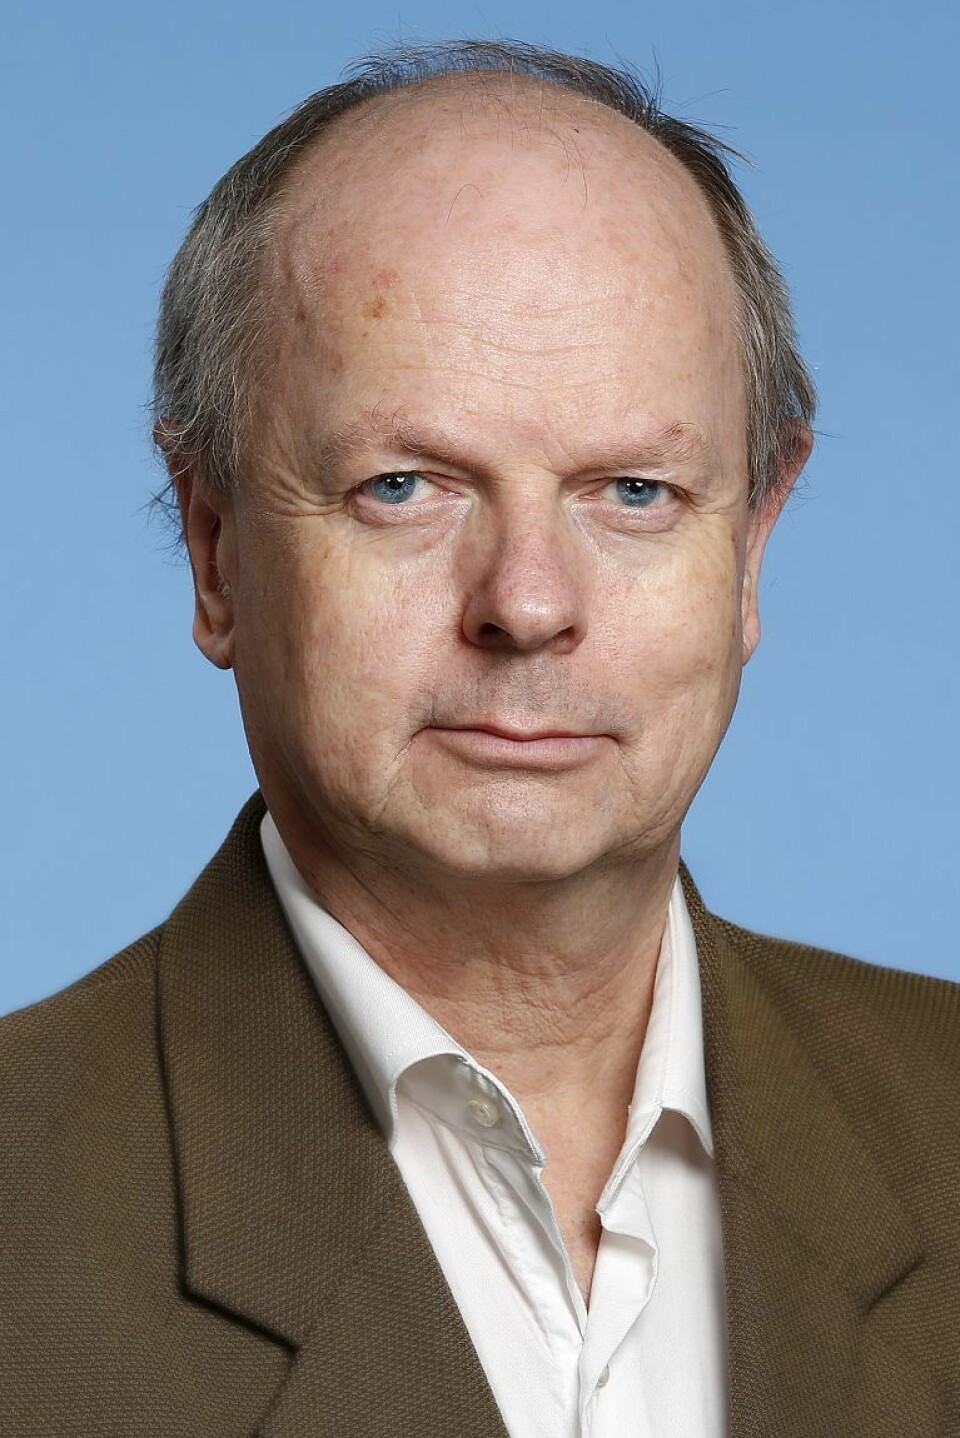 NRKs Moskva-korrespondent Morten Jentoft.